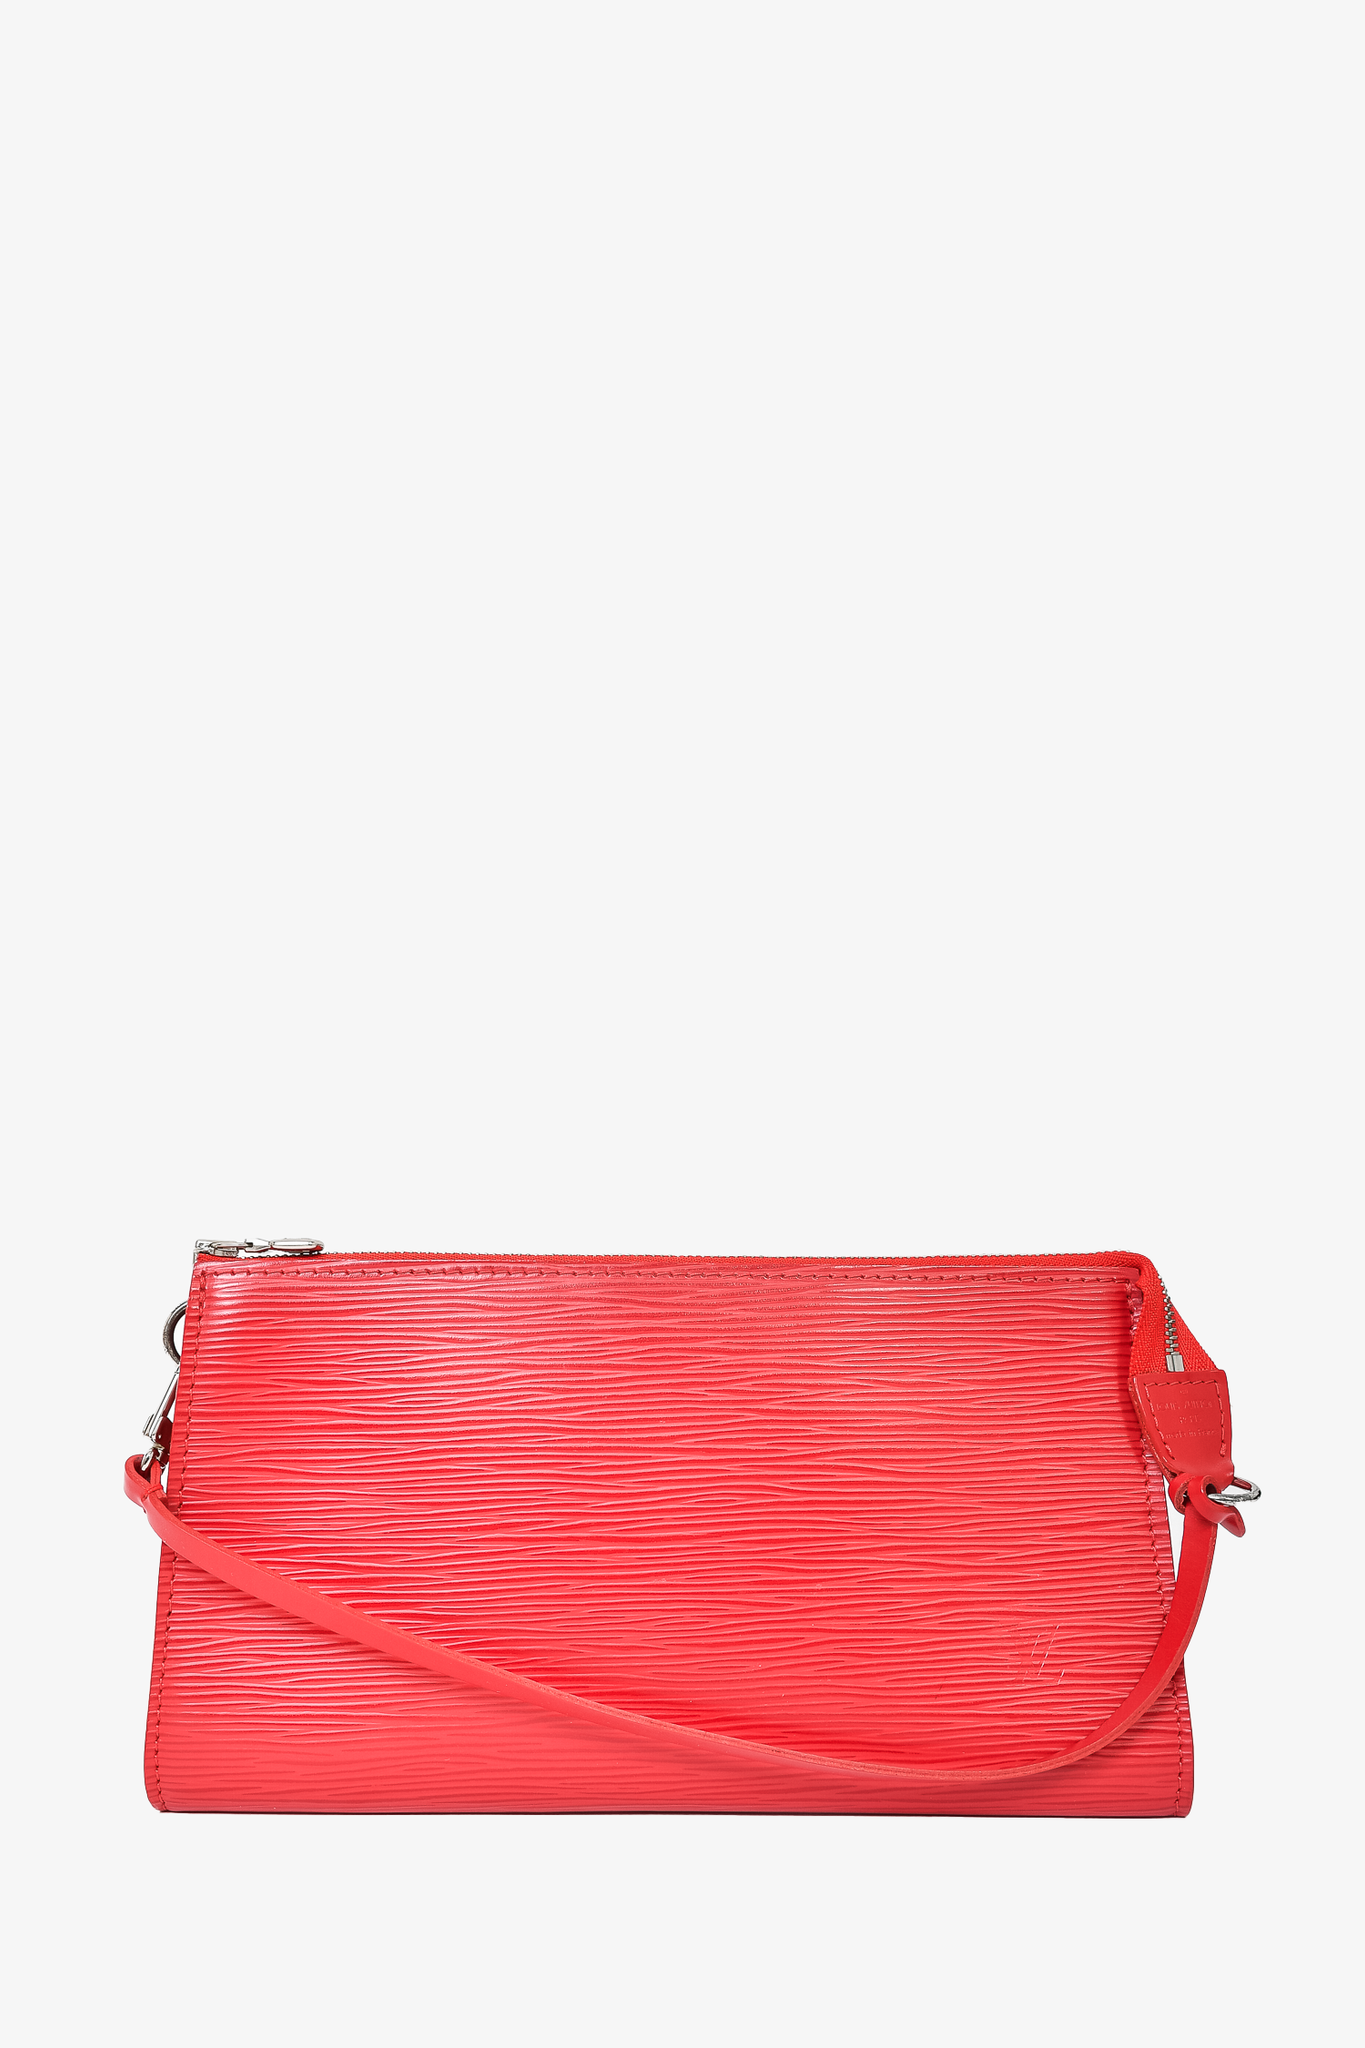 Louis Vuitton Red Epi Leather Pochette Accessories Clutch